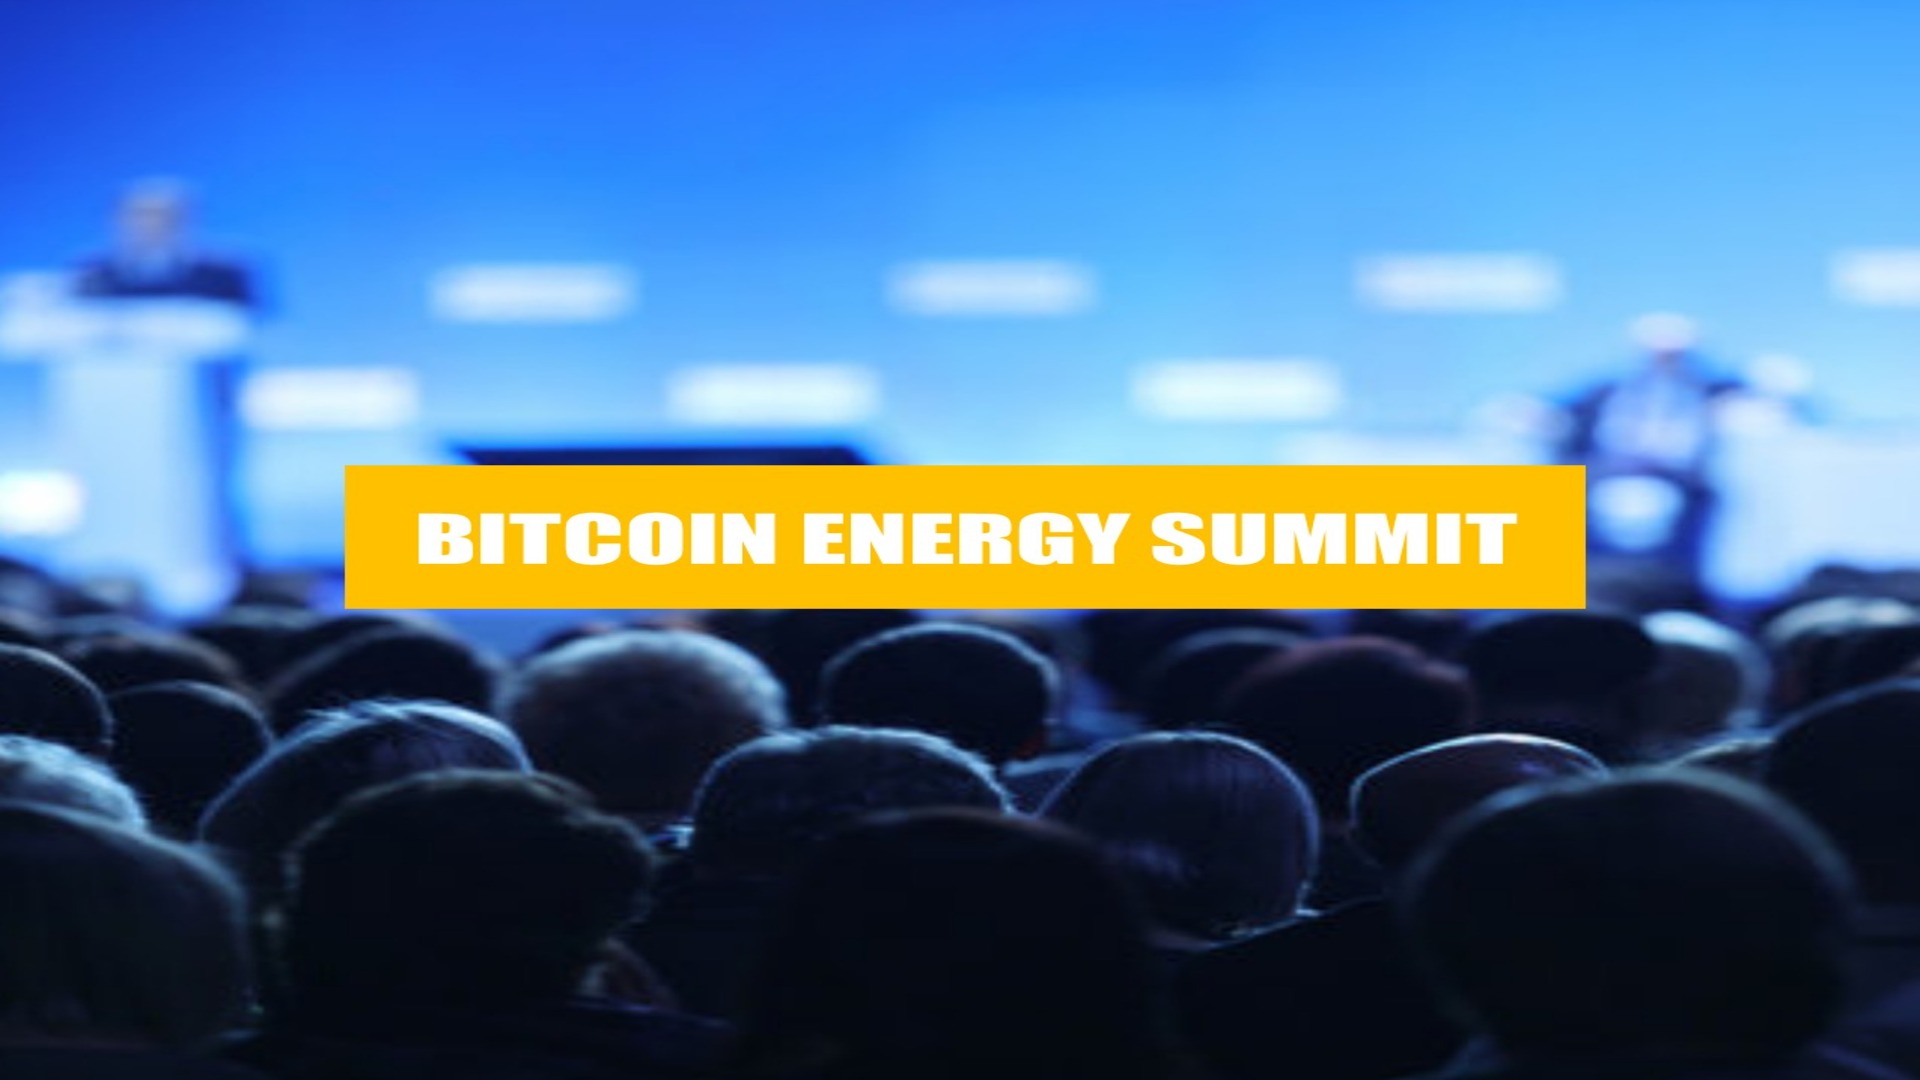 Bitcoin Energy Summit: Focused on Power Energy & Sustainability